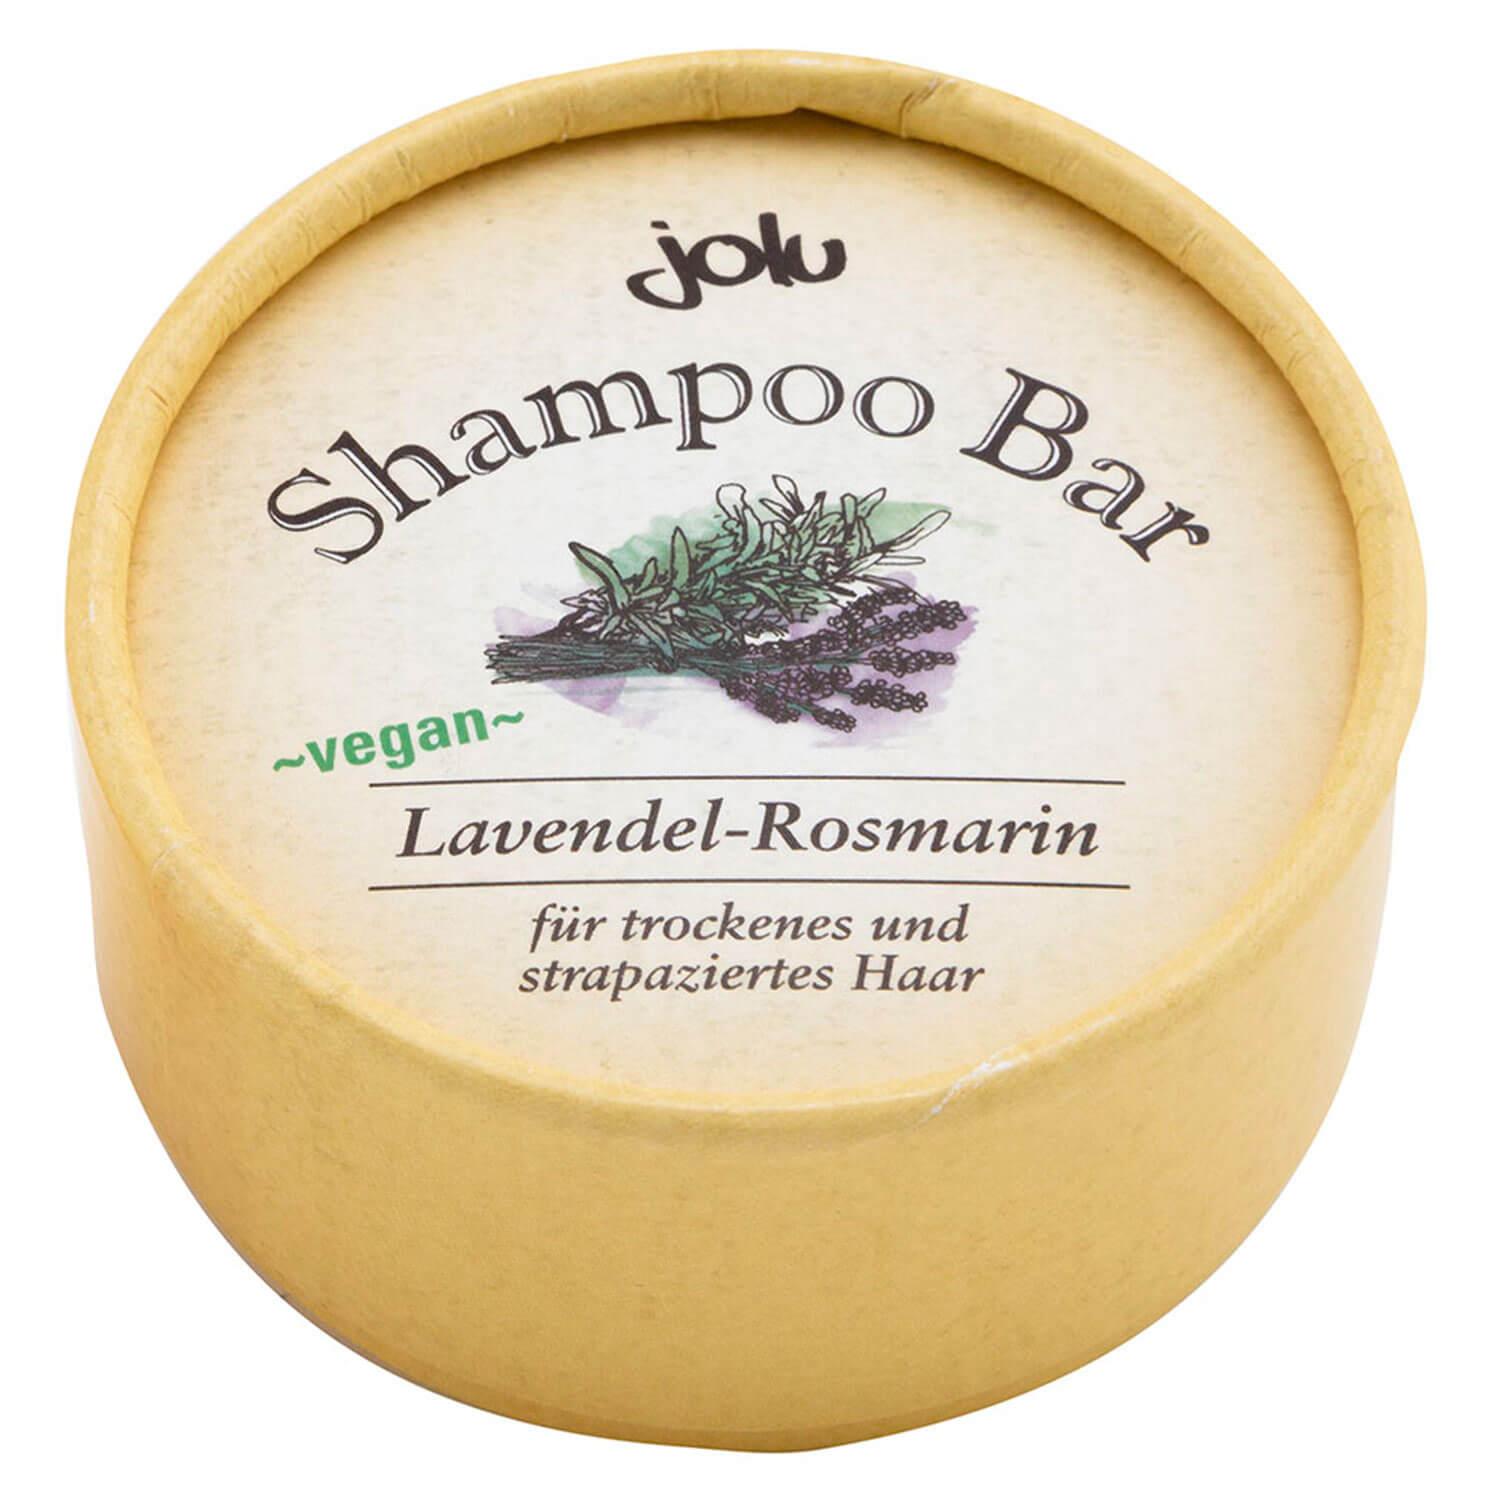 jolu - Shampoo Bar Lavendel Rosmarin